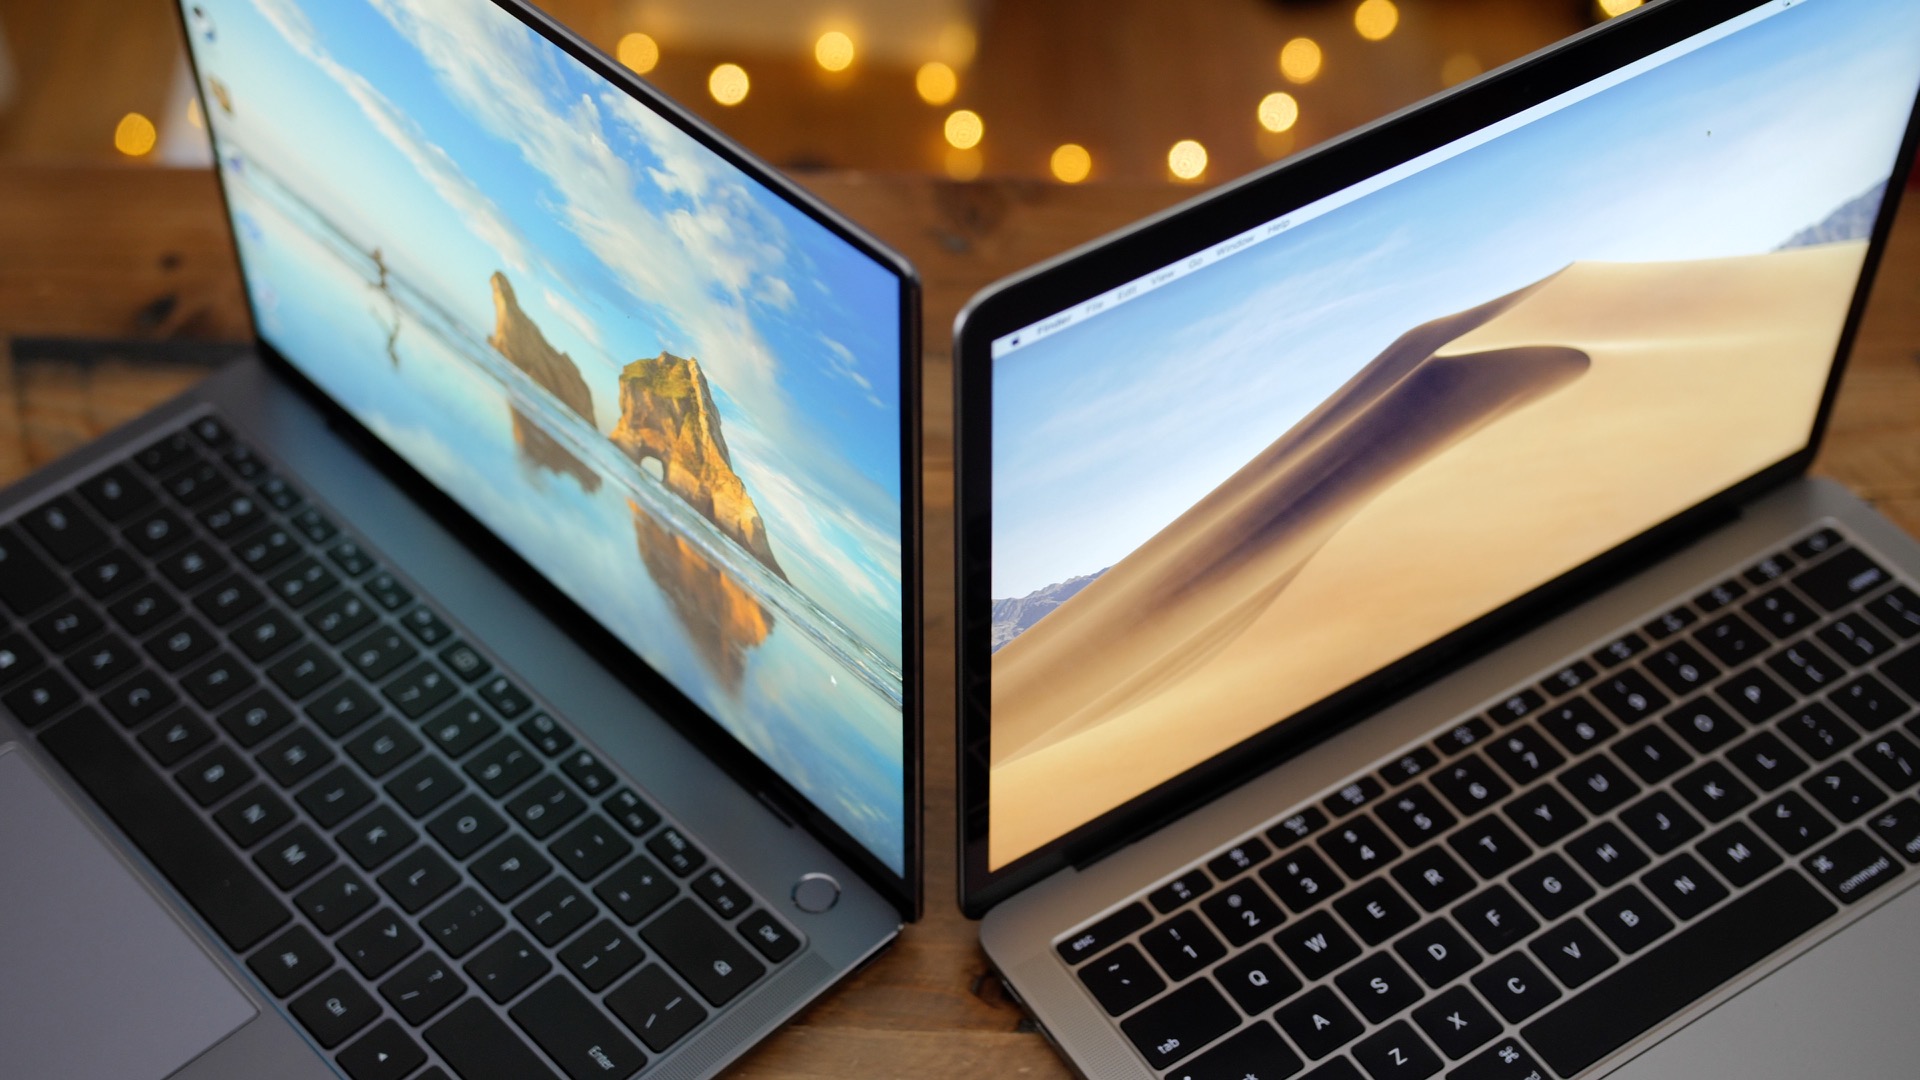 Compared: Huawei MateBook X vs MacBook Pro - should Apple fans be jealous? - 9to5Mac